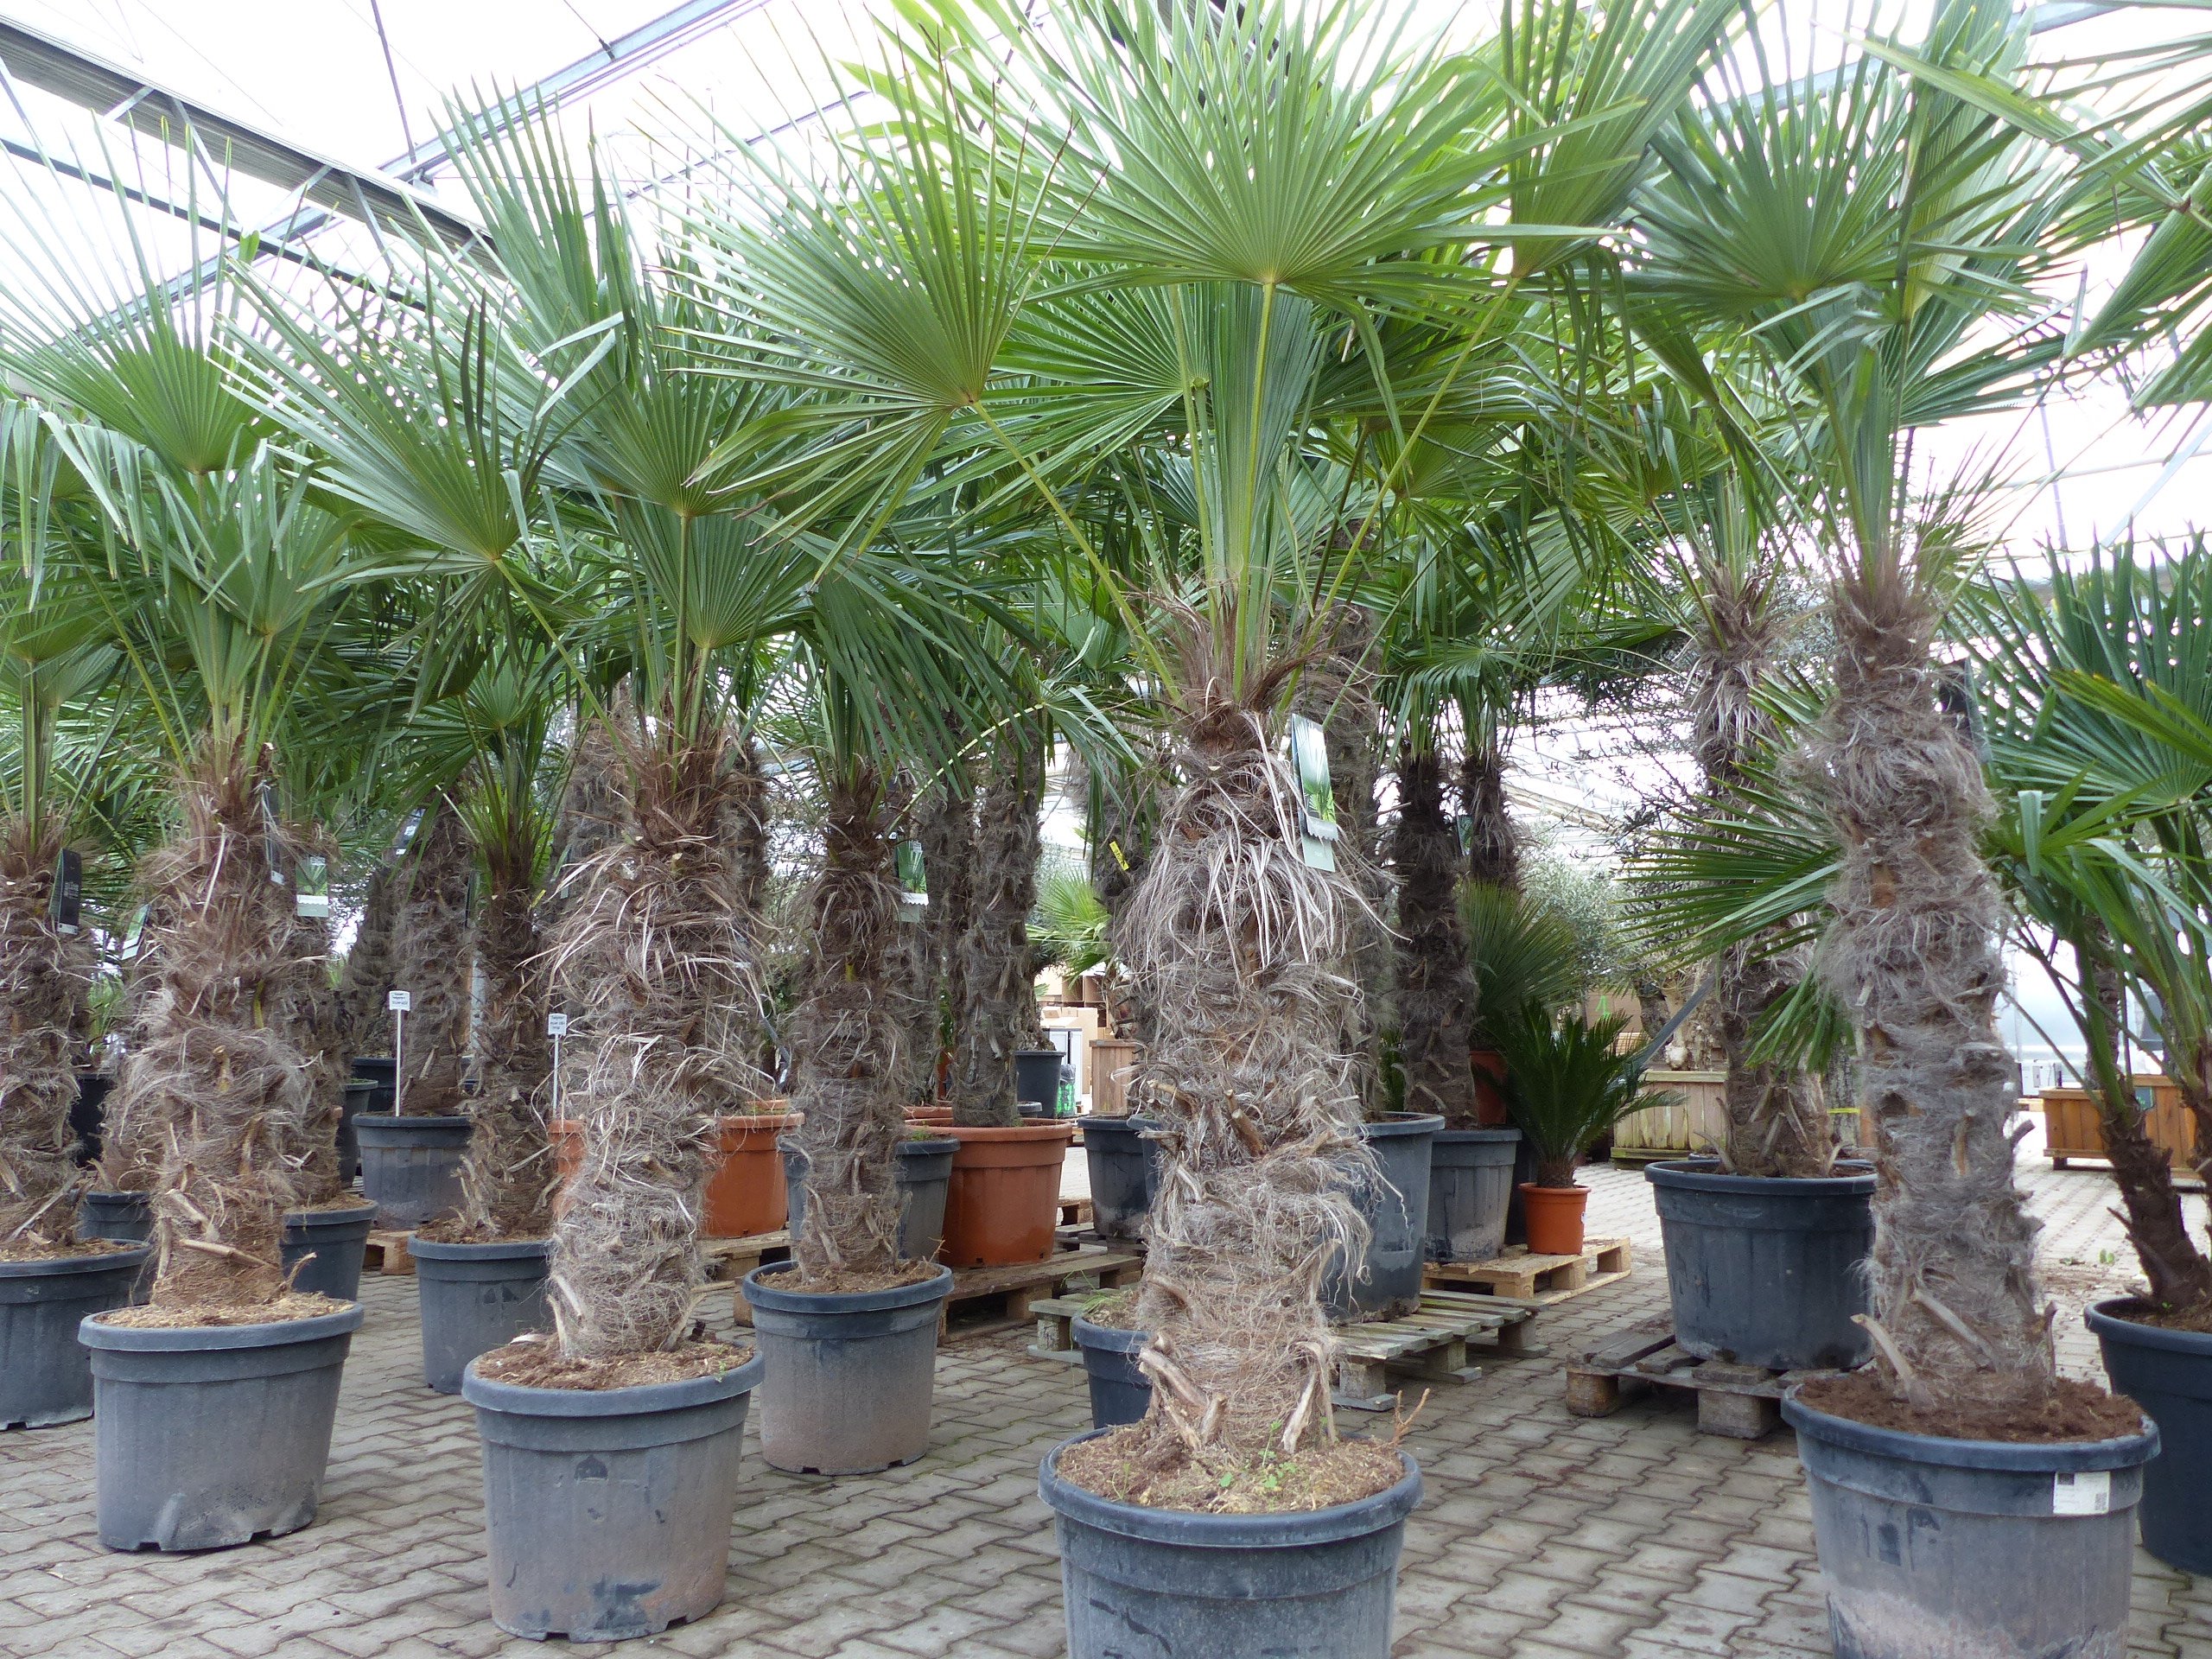 XXXXL 210 - 230 cm Trachycarpus fortunei Hanfpalme, winterharte Palme bis -18°C